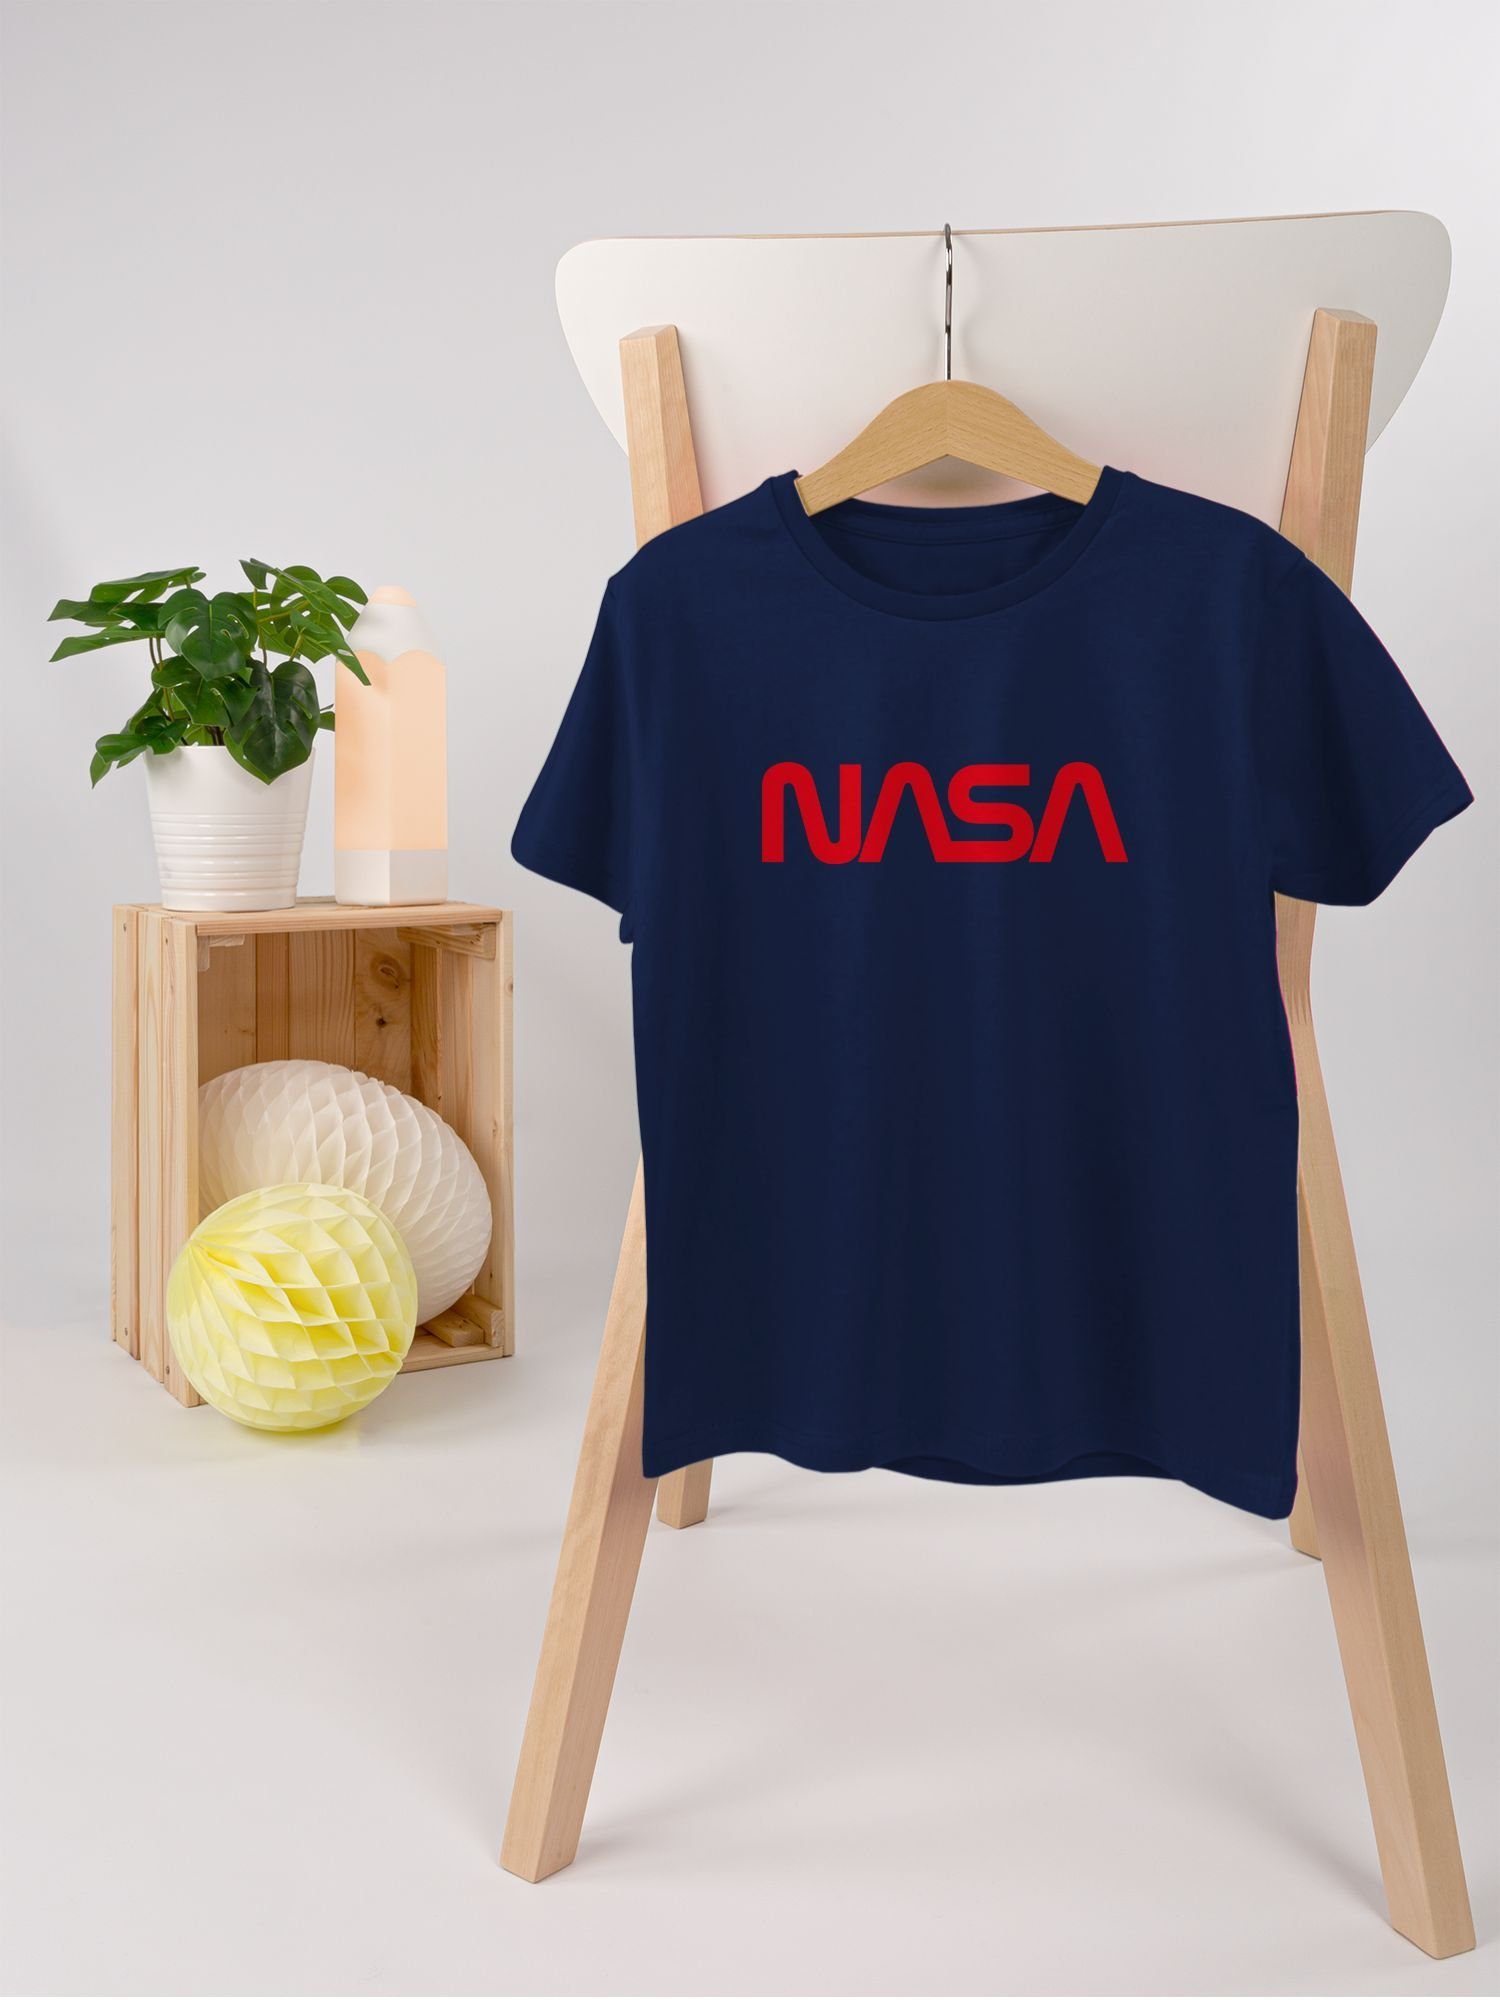 Shirtracer T-Shirt Kinderkleidung Mondlandung Astronaut 1 Co Nasa und - Raumfahrt Weltraum Dunkelblau